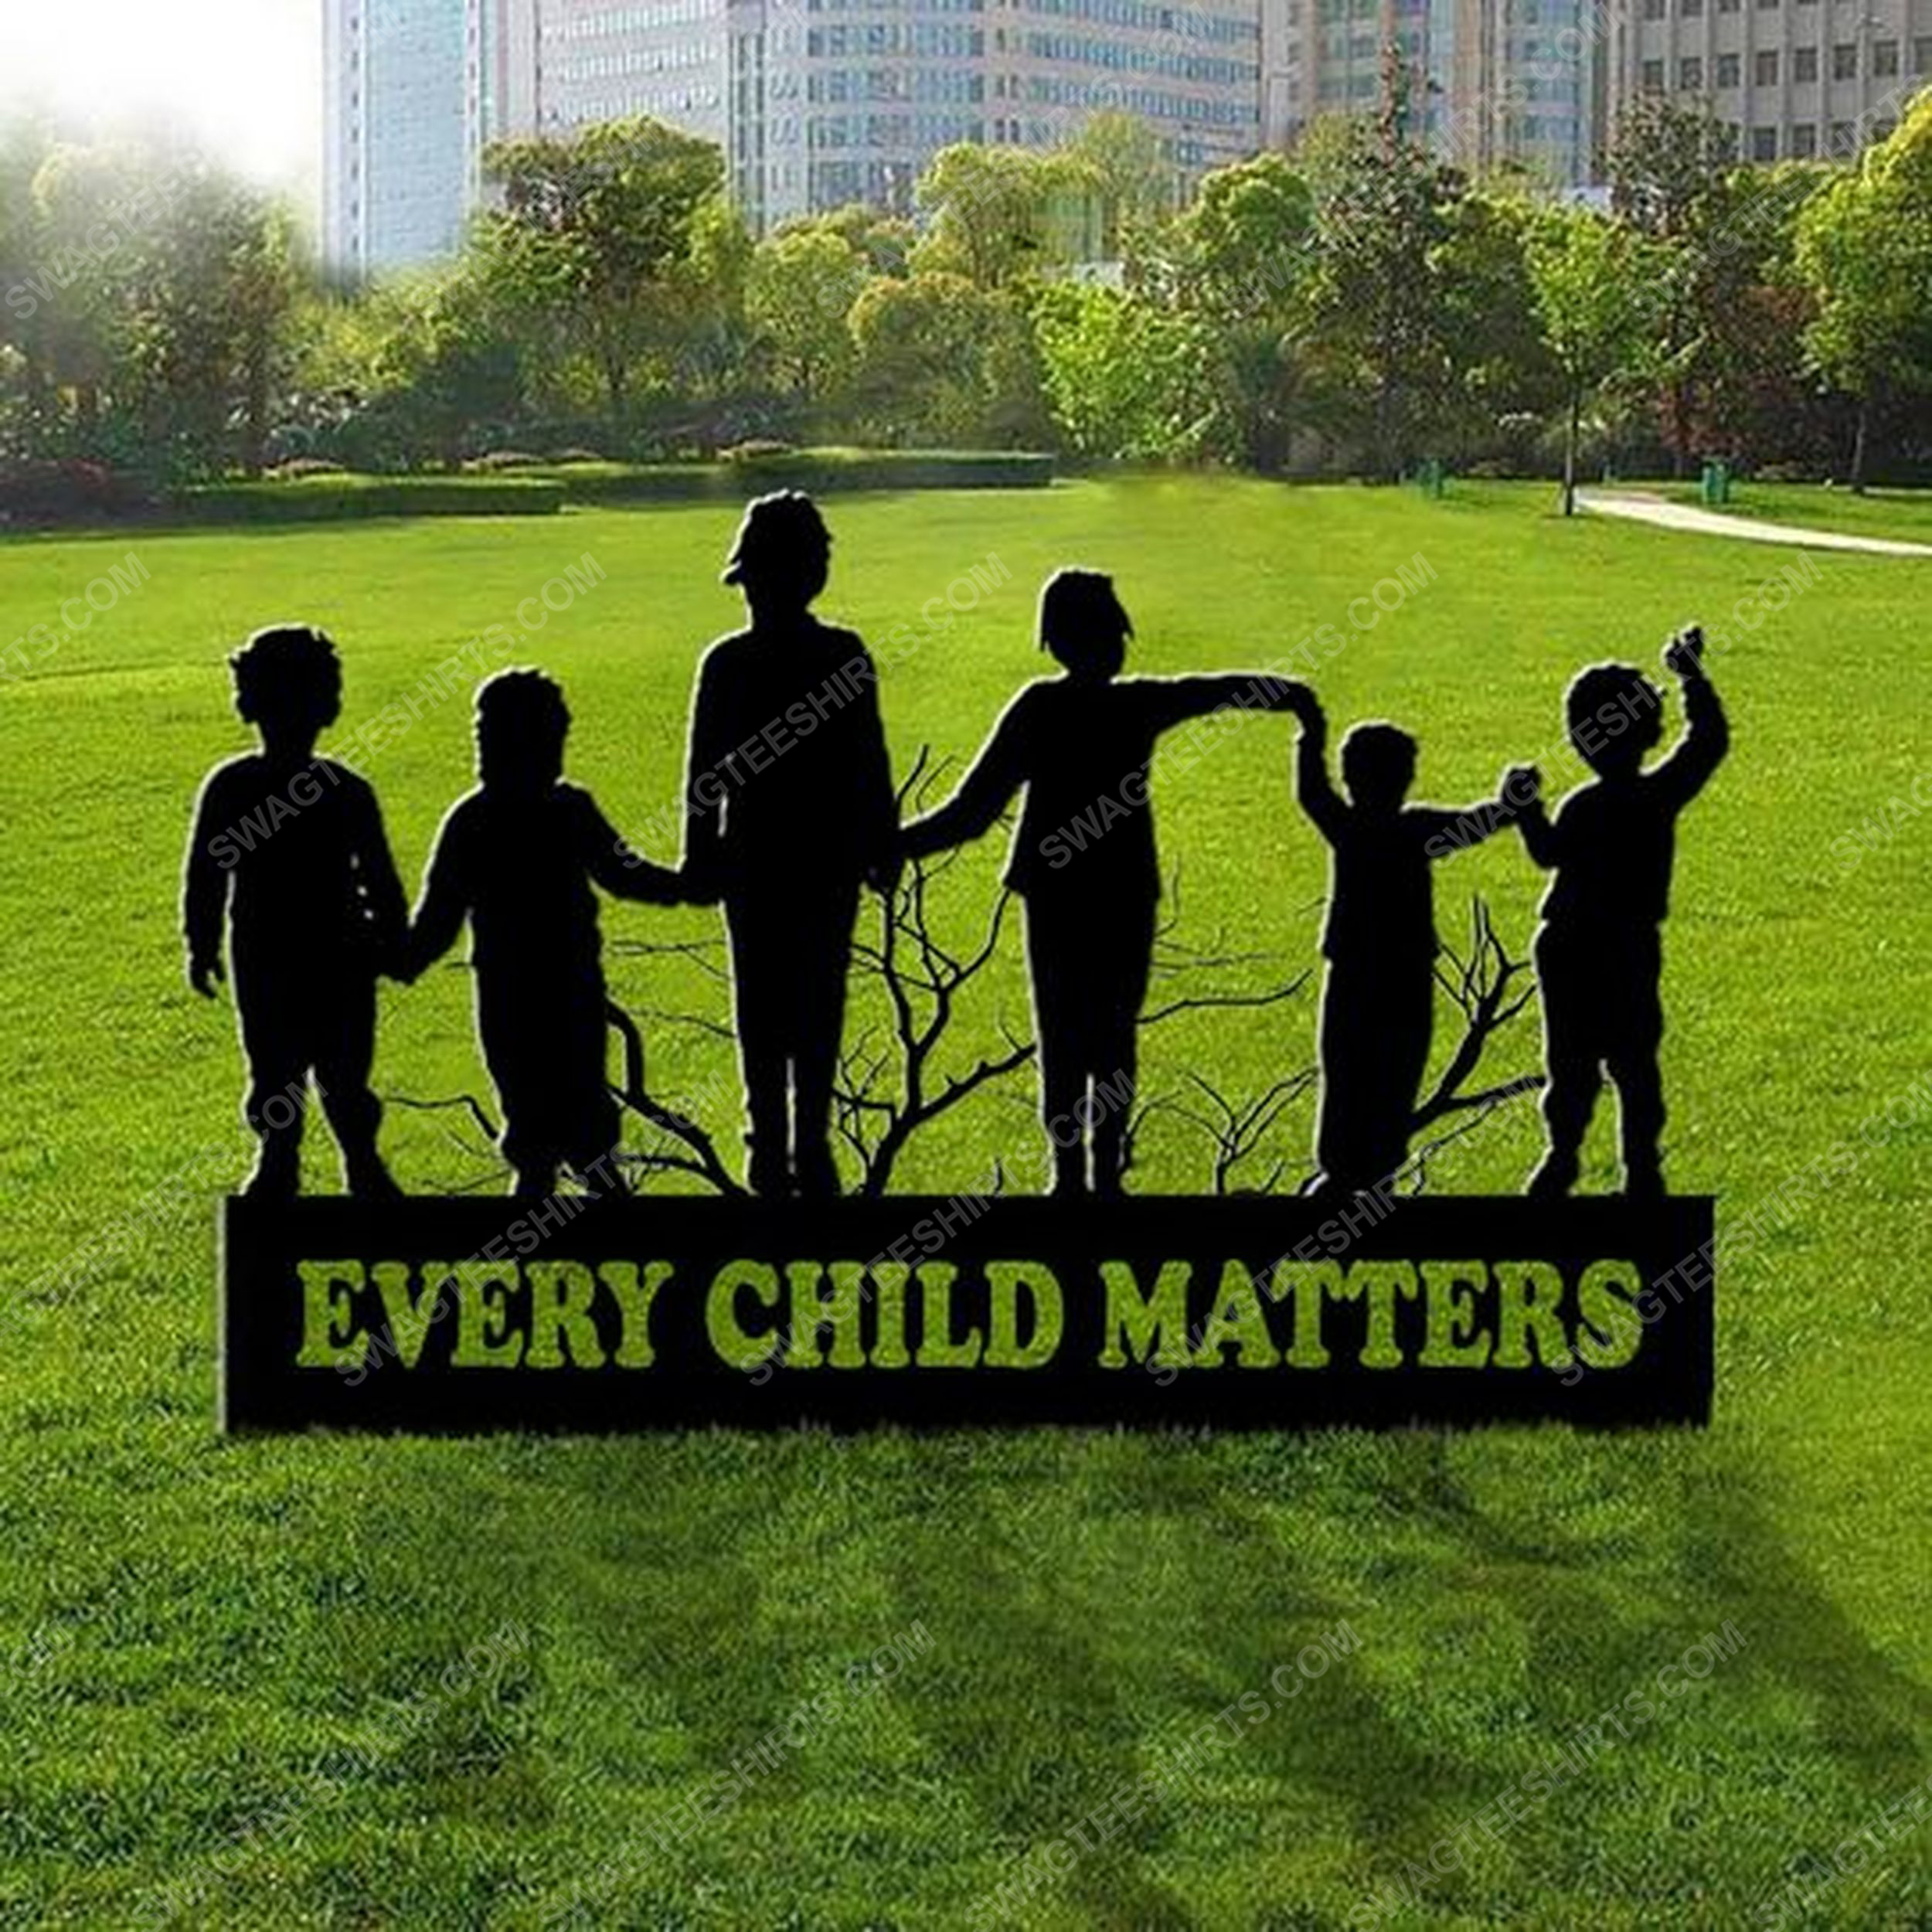 Awareness child lives matter movement merch every child matters yard sign 2(1)